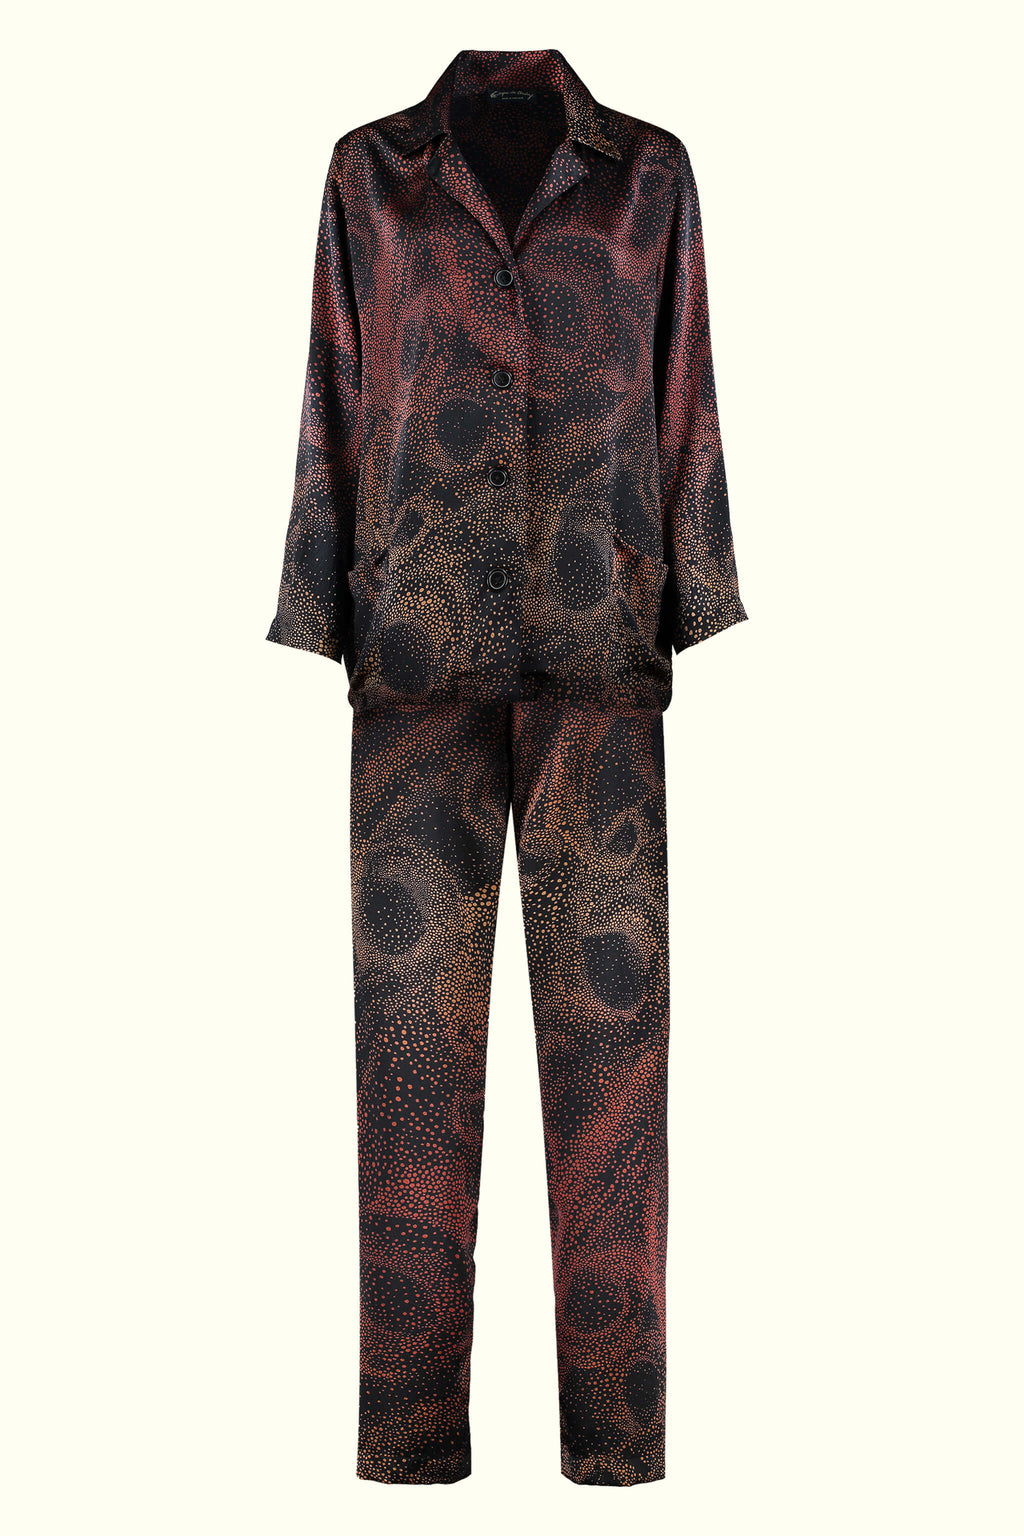 Aurora Black and Red textile design Pyjamas set Pearl Satin Silk - by GvE&Co (Georgina von Etzdorf and co)